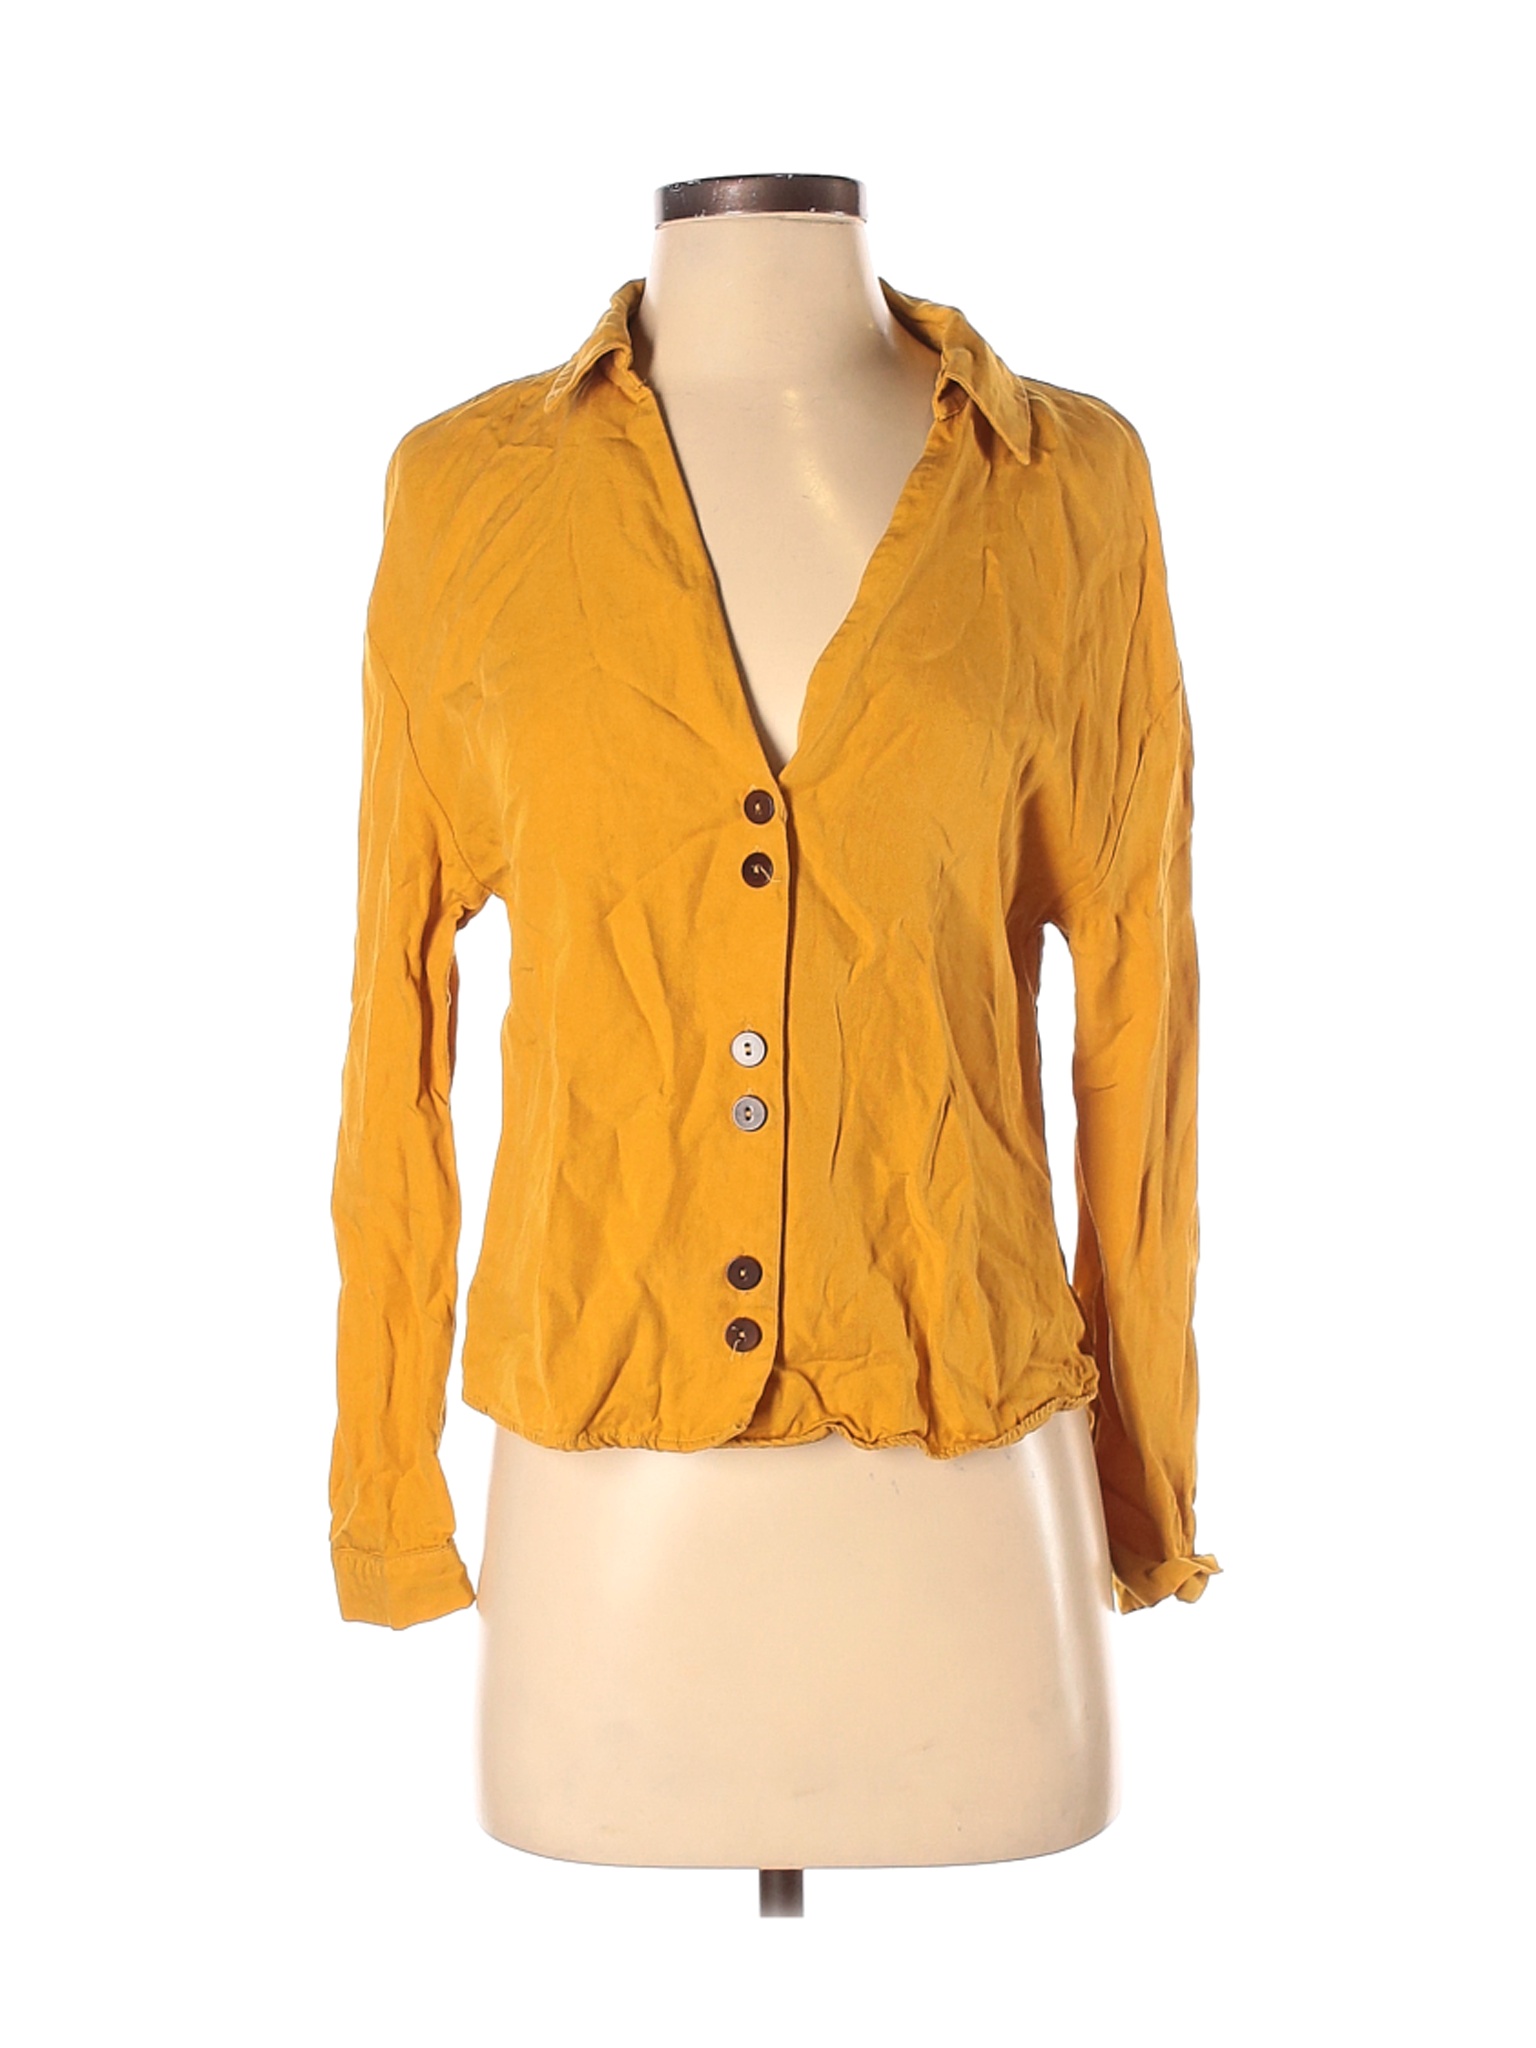 Trafaluc by Zara Women Yellow Long Sleeve Blouse S | eBay